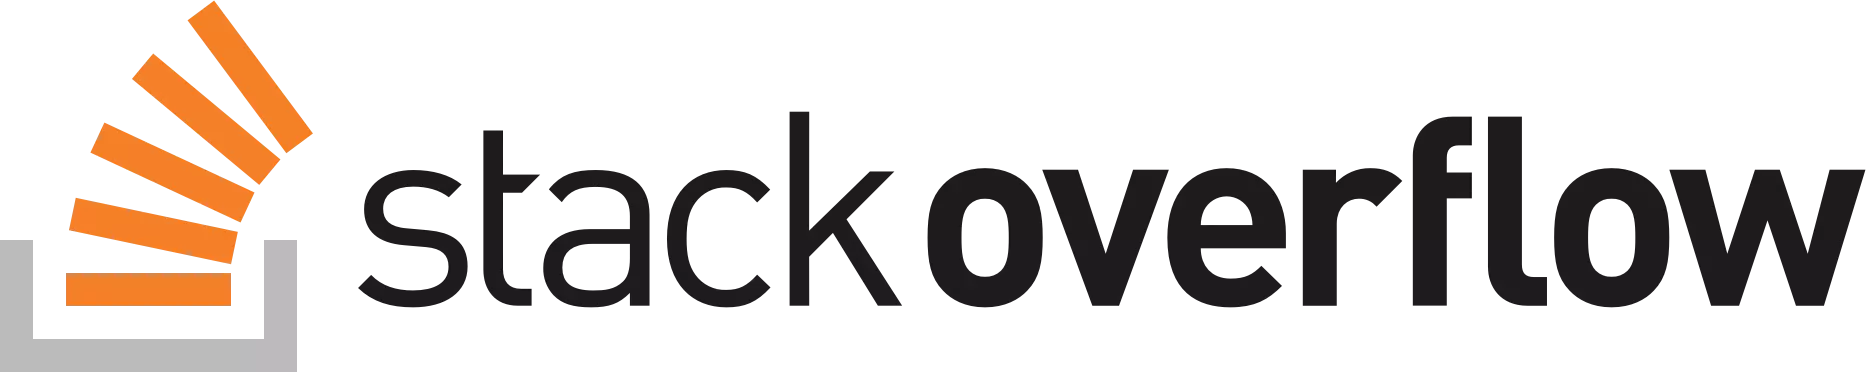 StackOverflow.com - BendaThierry.com